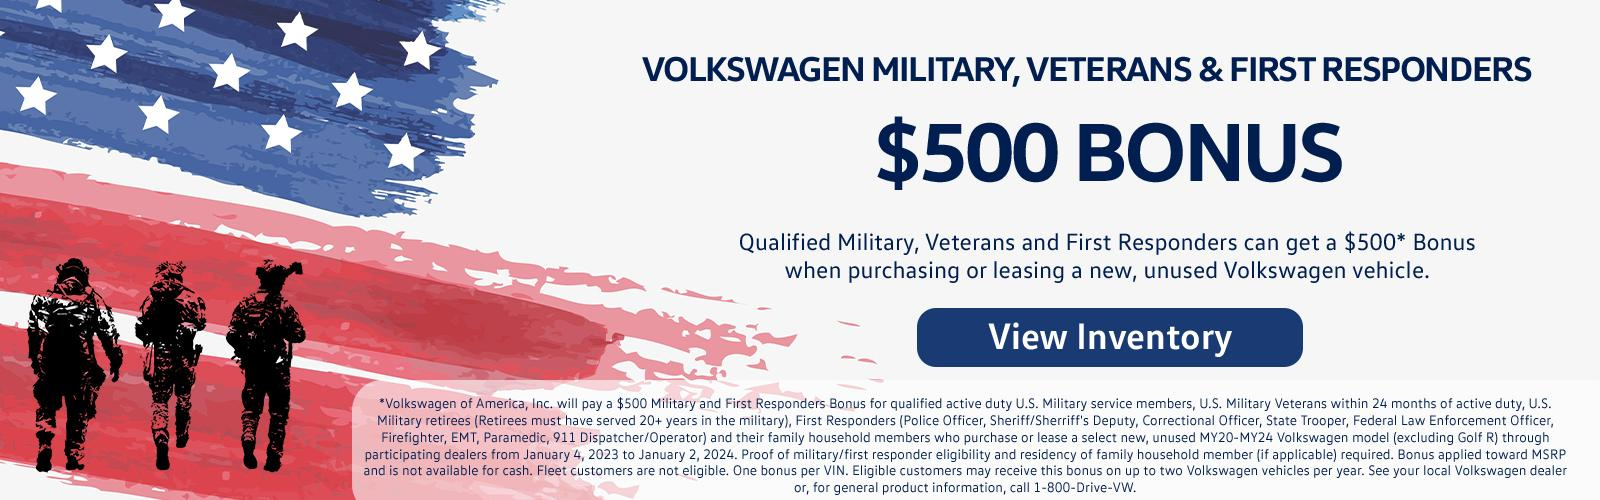 VW Military, Veterans, & First Responders $500 Bonus Cash